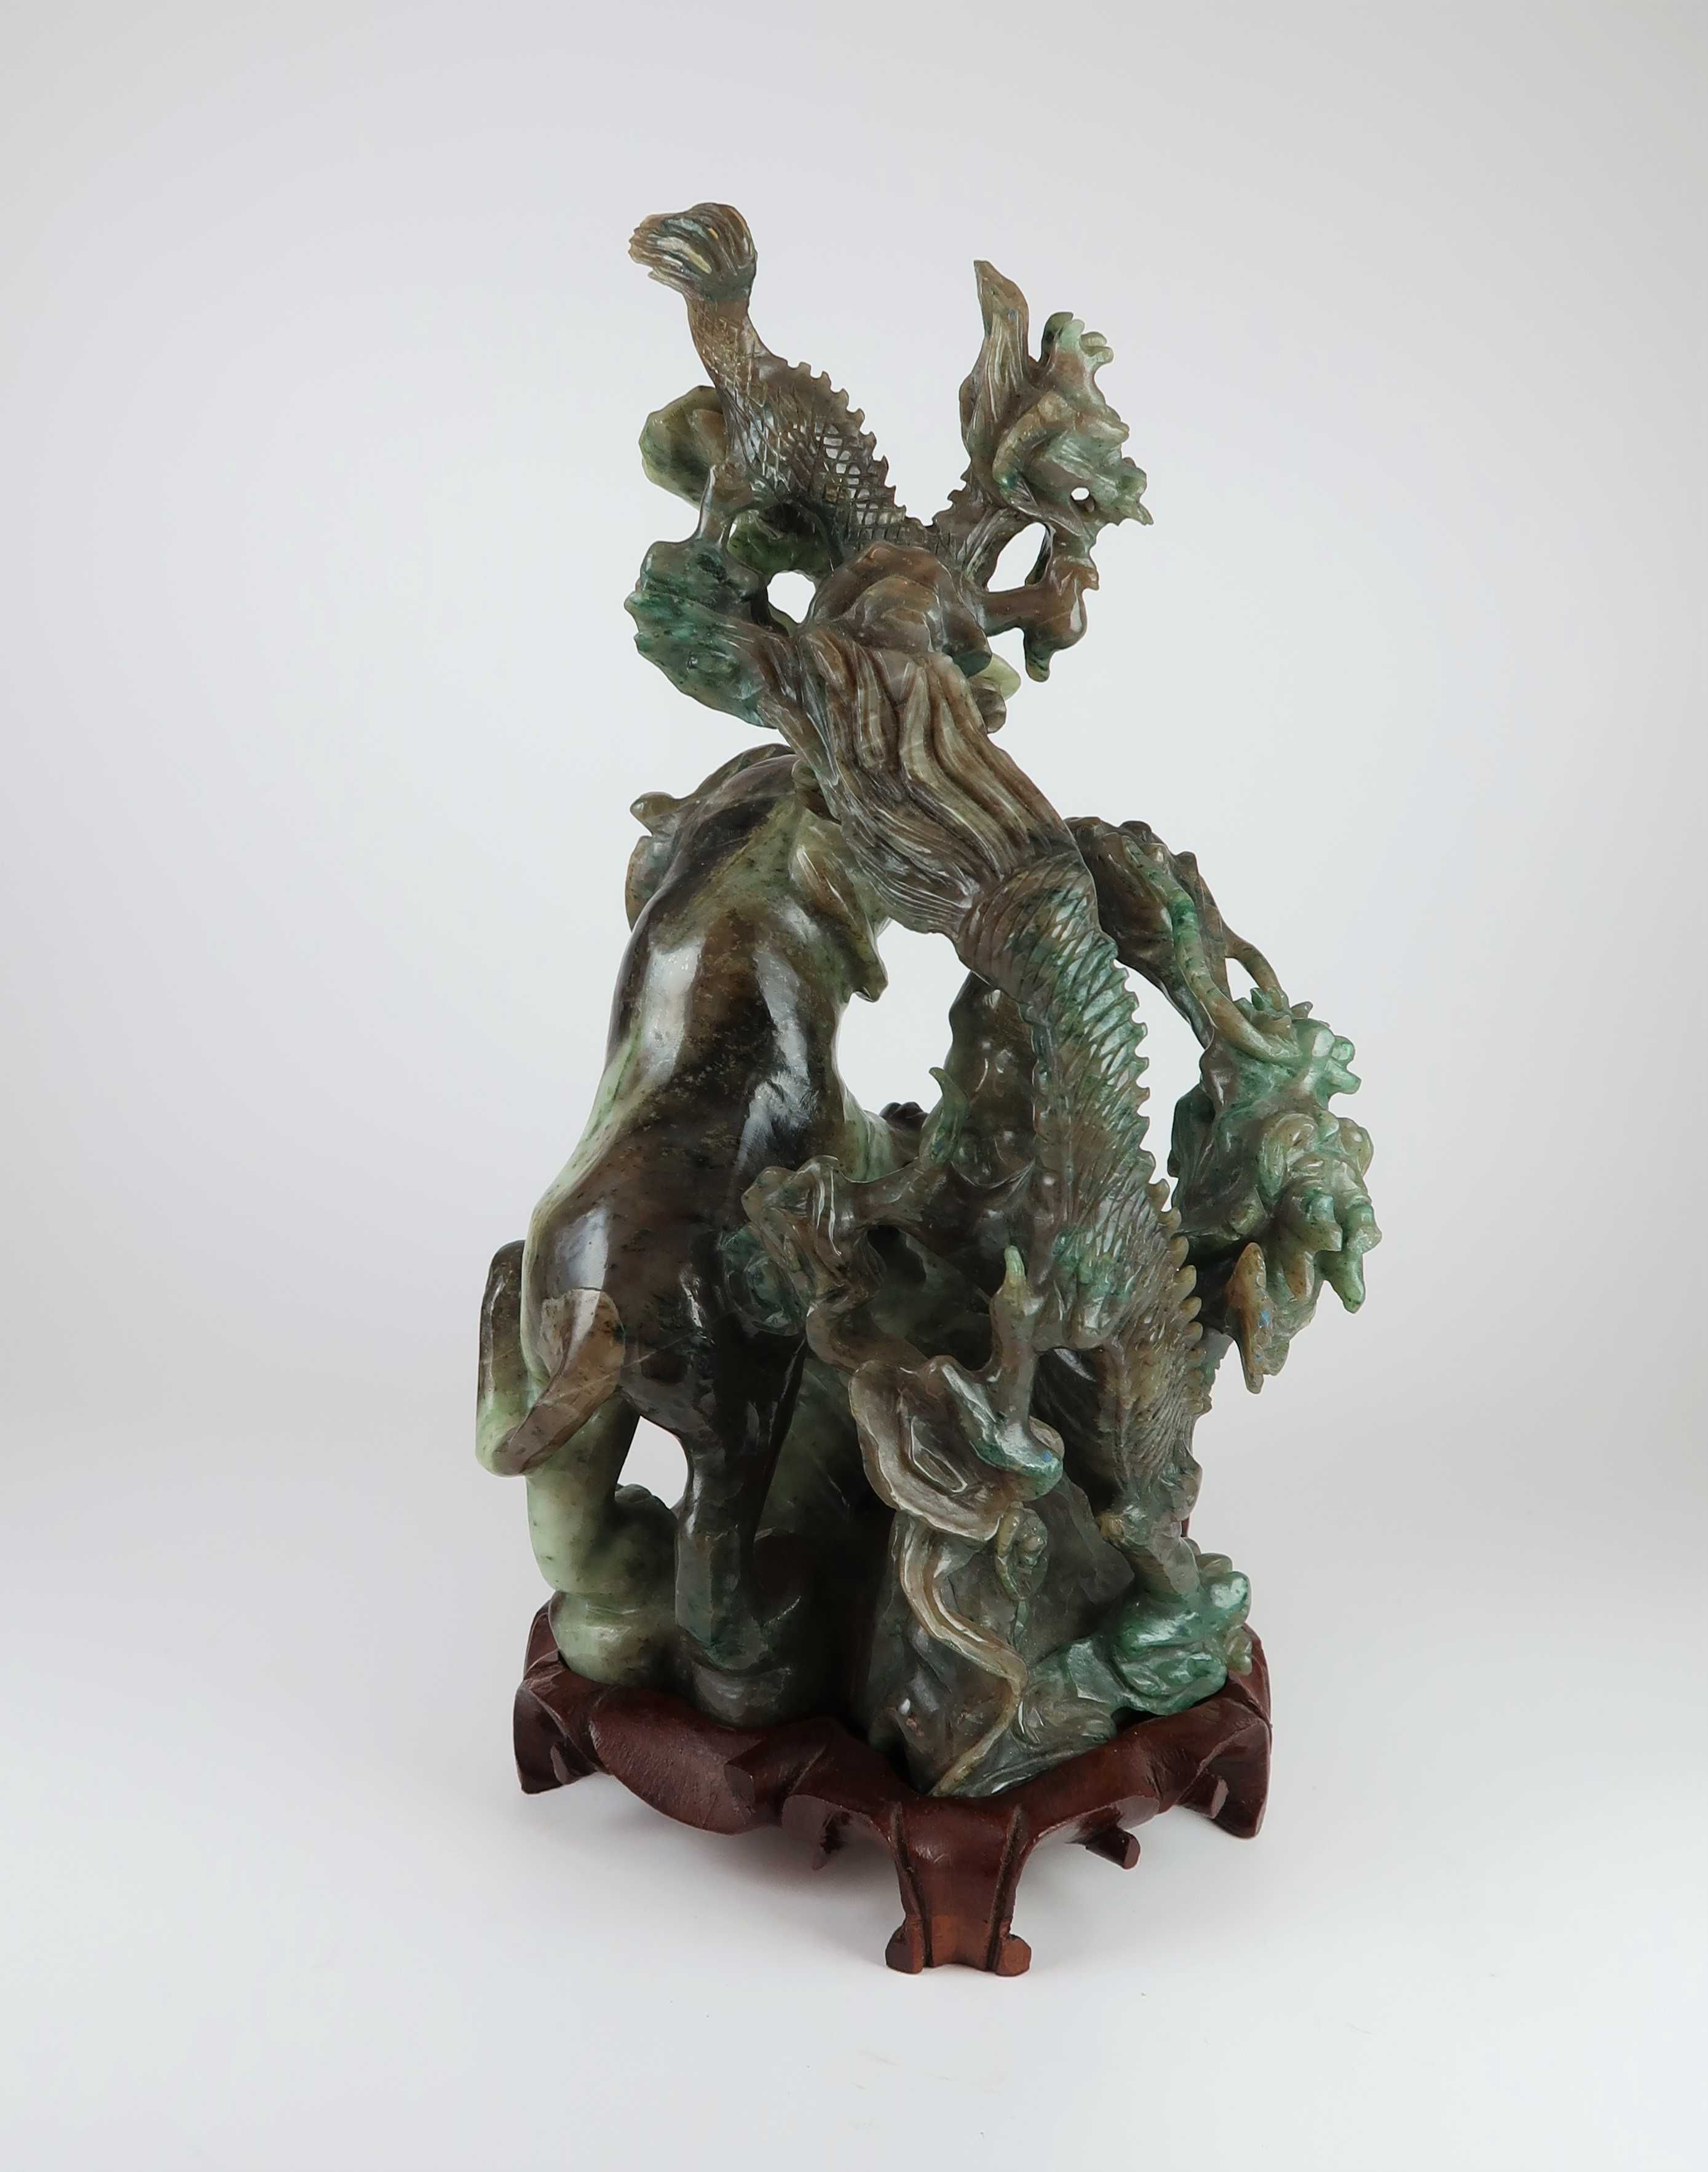 Escultura da China (Jade ? / Jadeite ?) - Ref 2